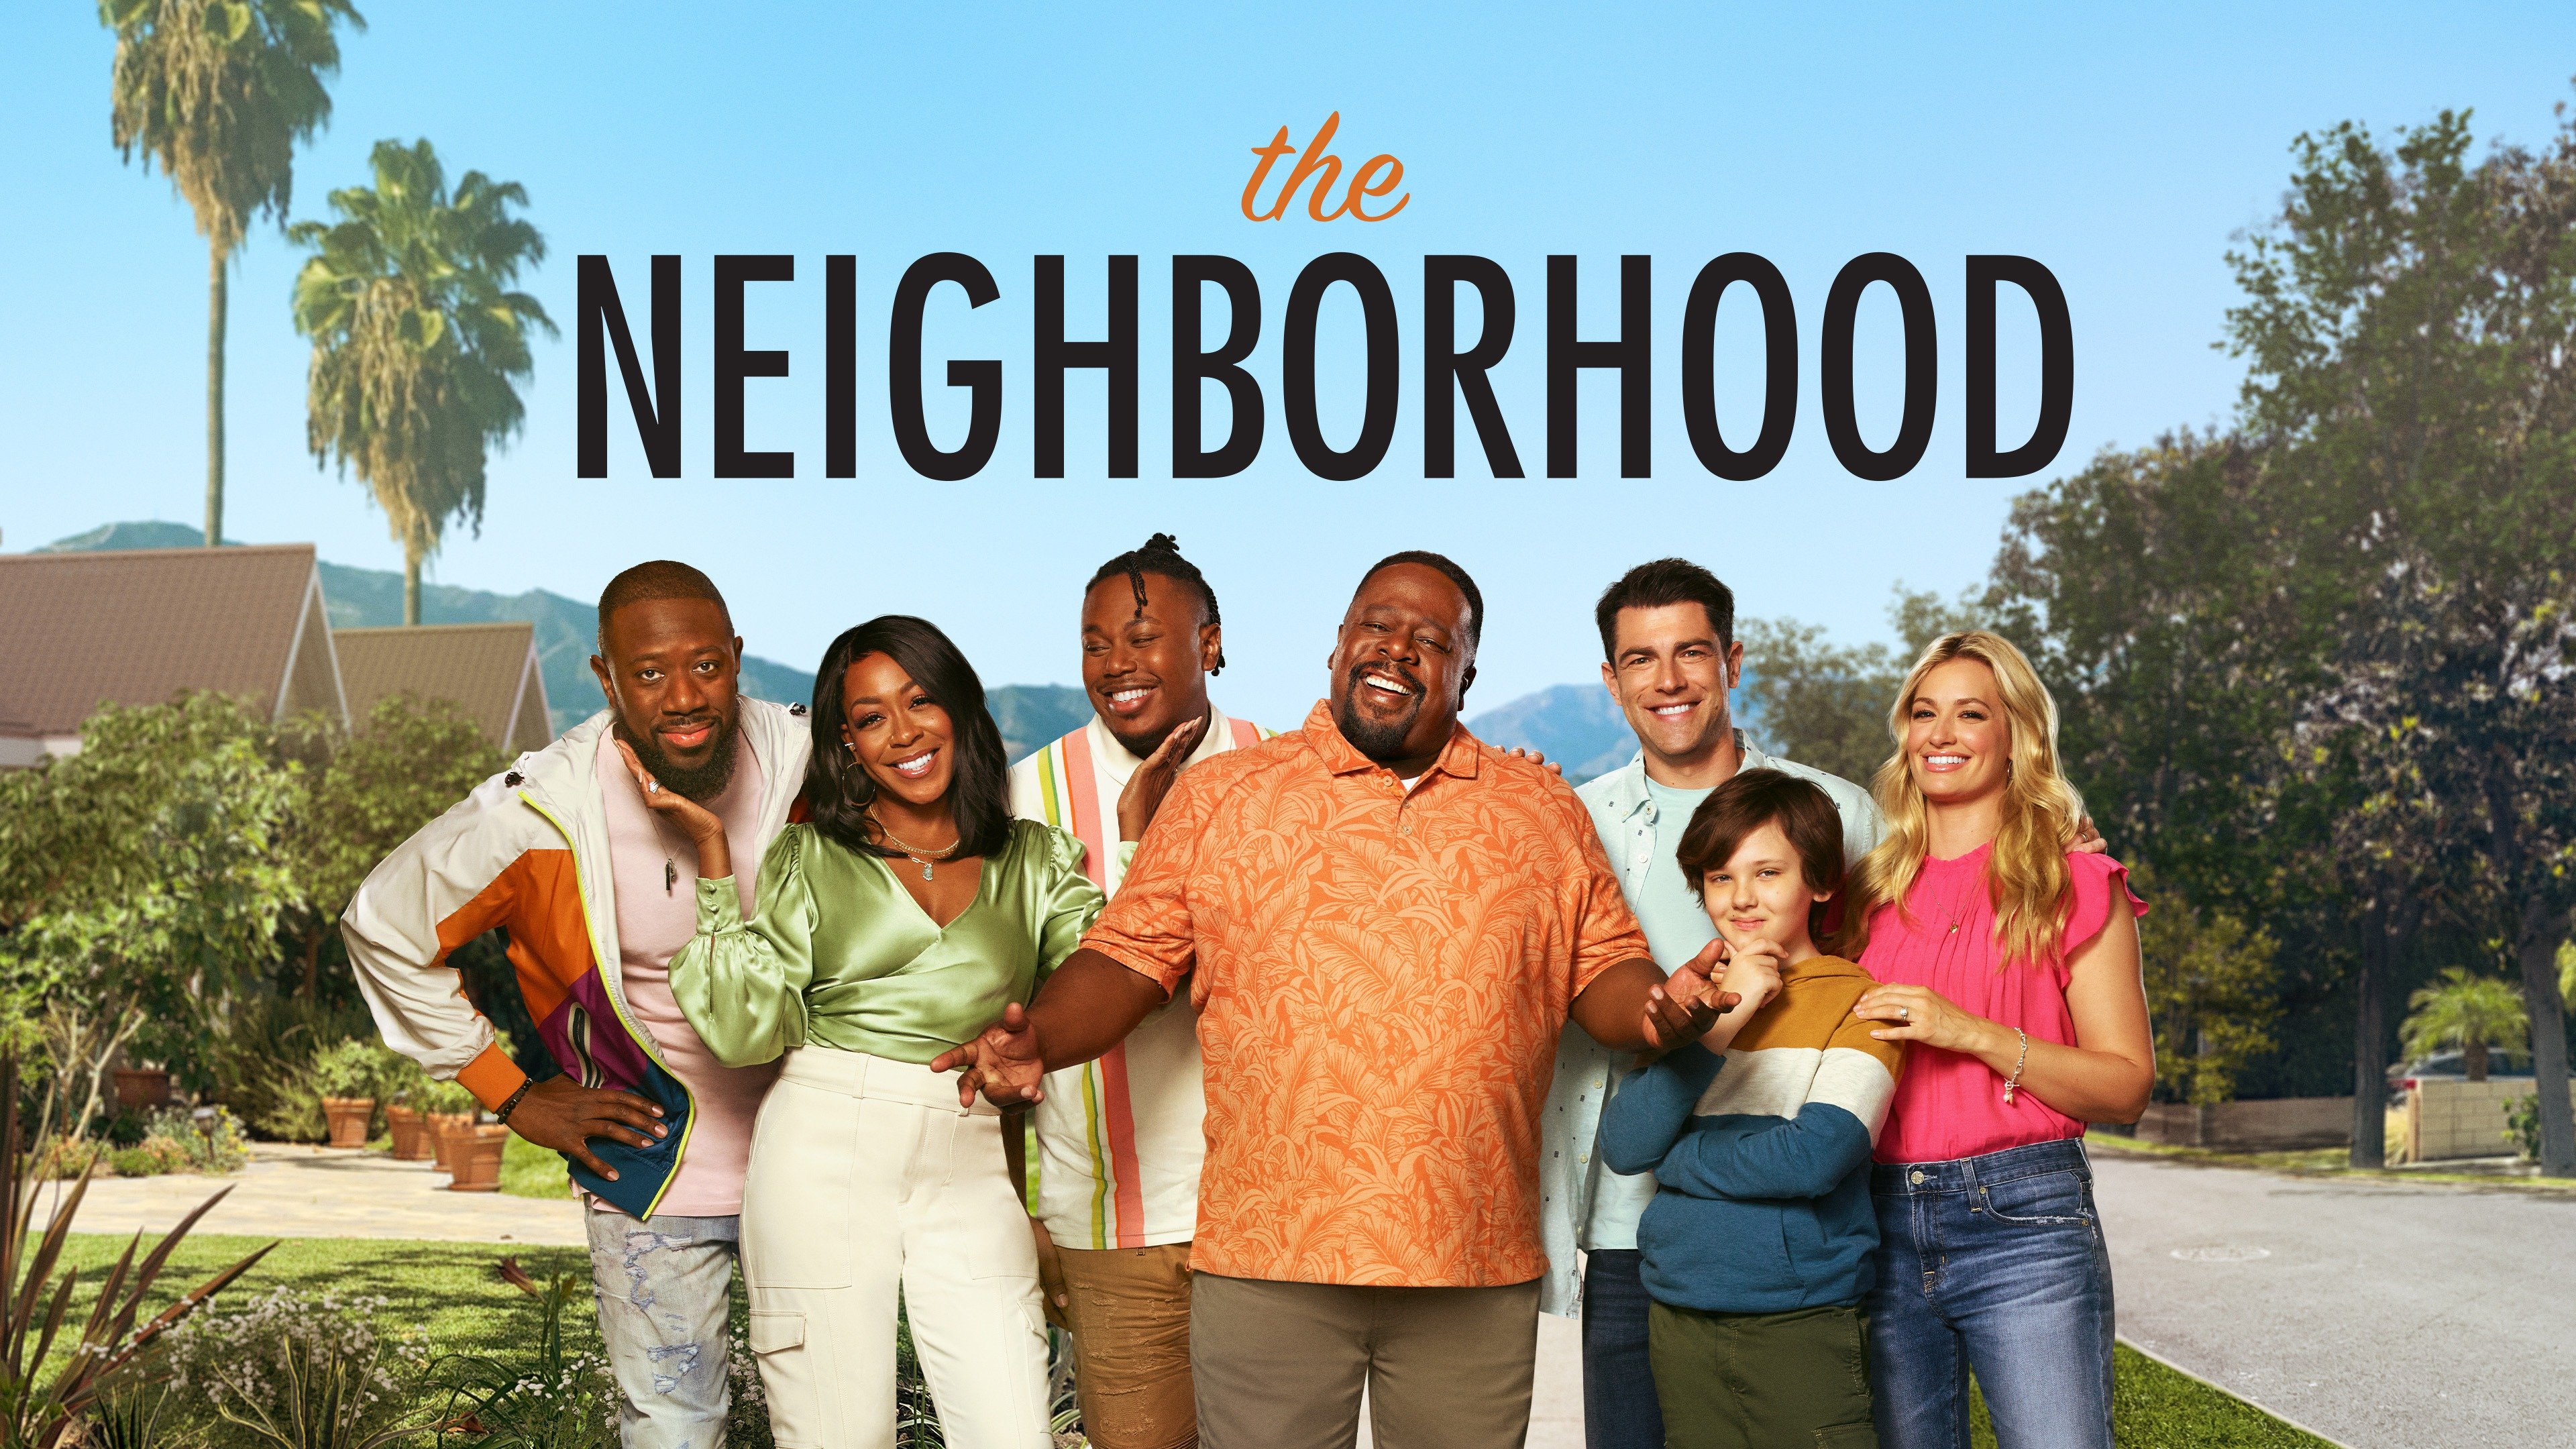 The Neighborhood - CBS Series - Where To Watch